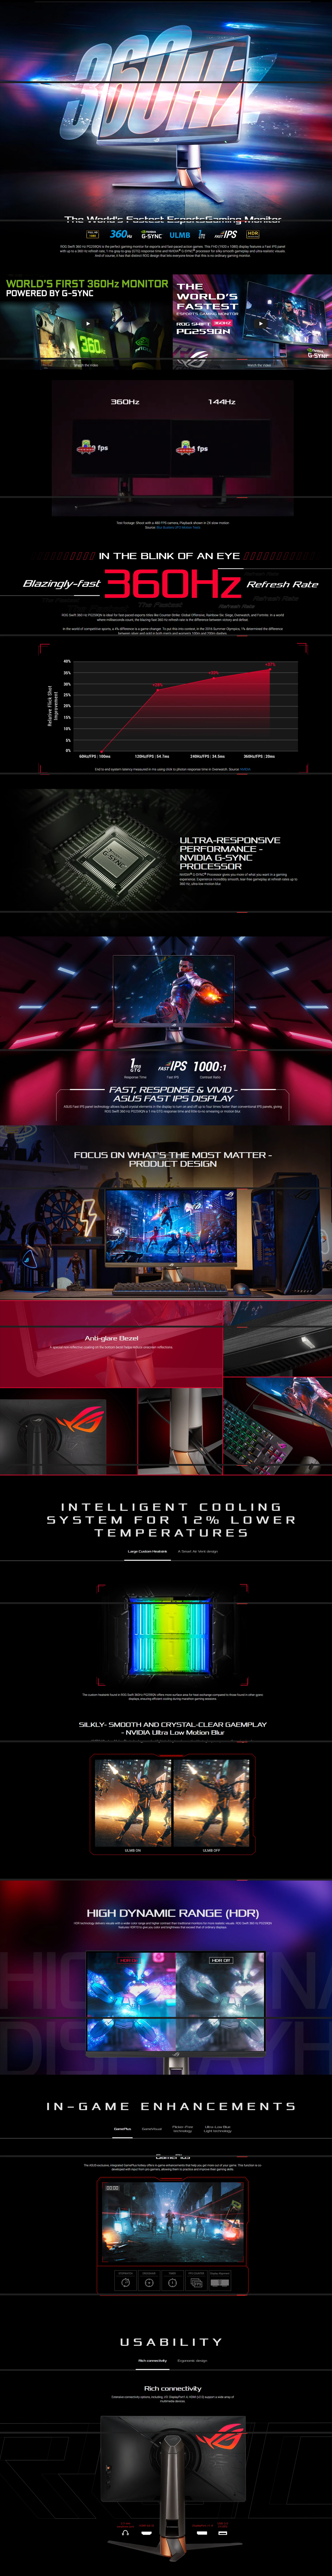 Monitor Gamer Asus ROG Swift Esports 24.5'' Fast Ips FHD 360Hz 1ms